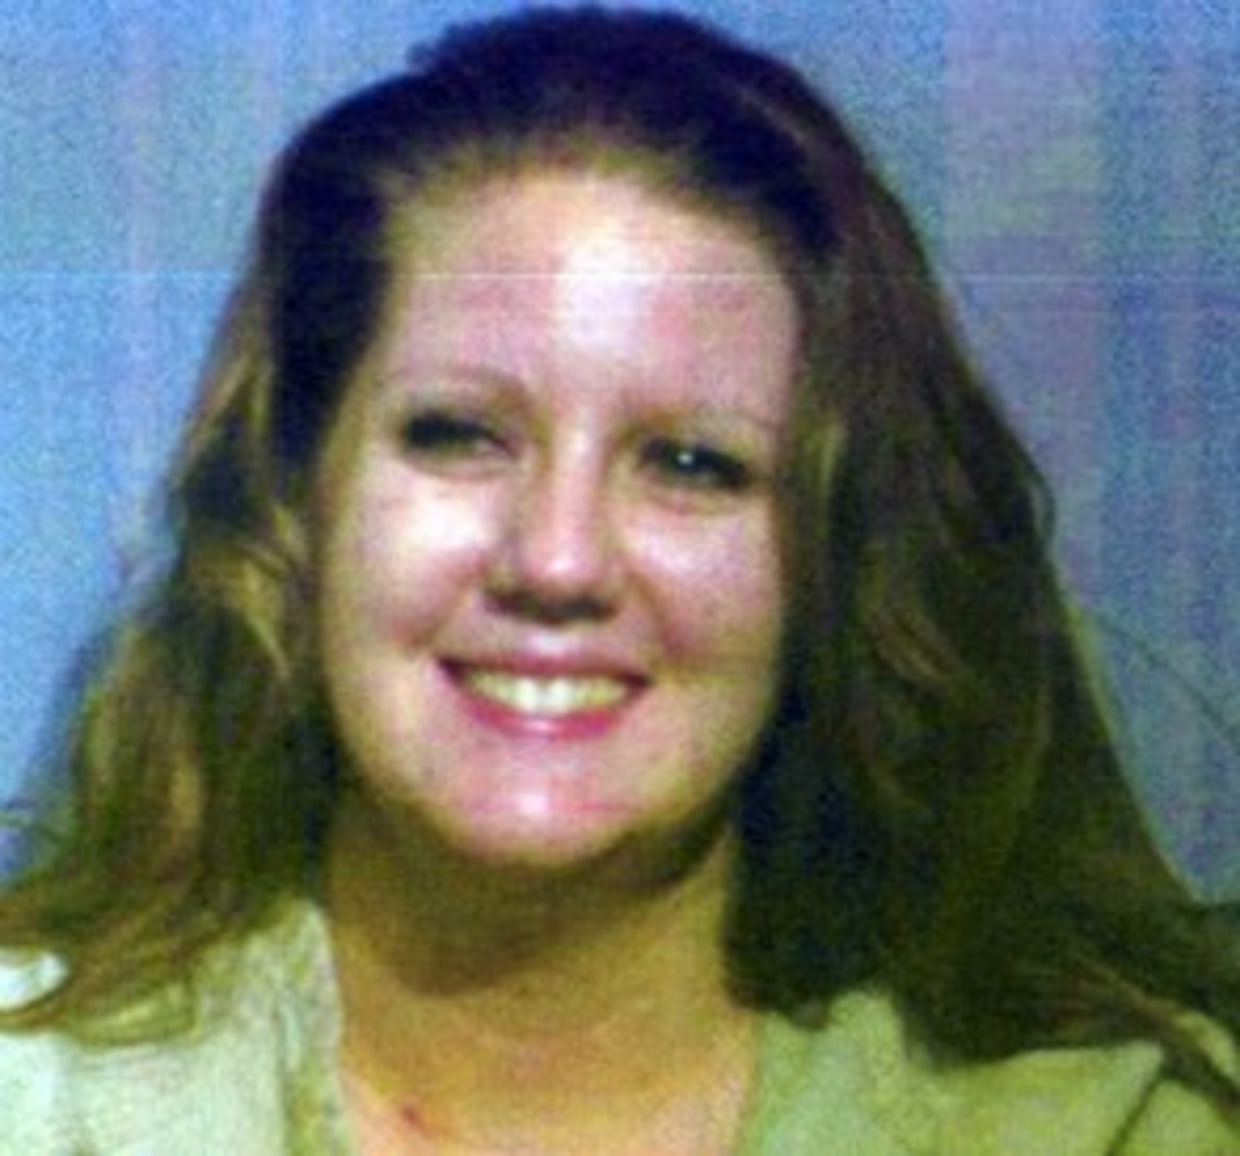 Bravotube Sleep Dady Xxx Video - Ohio mom accused of raping 10-month-old son